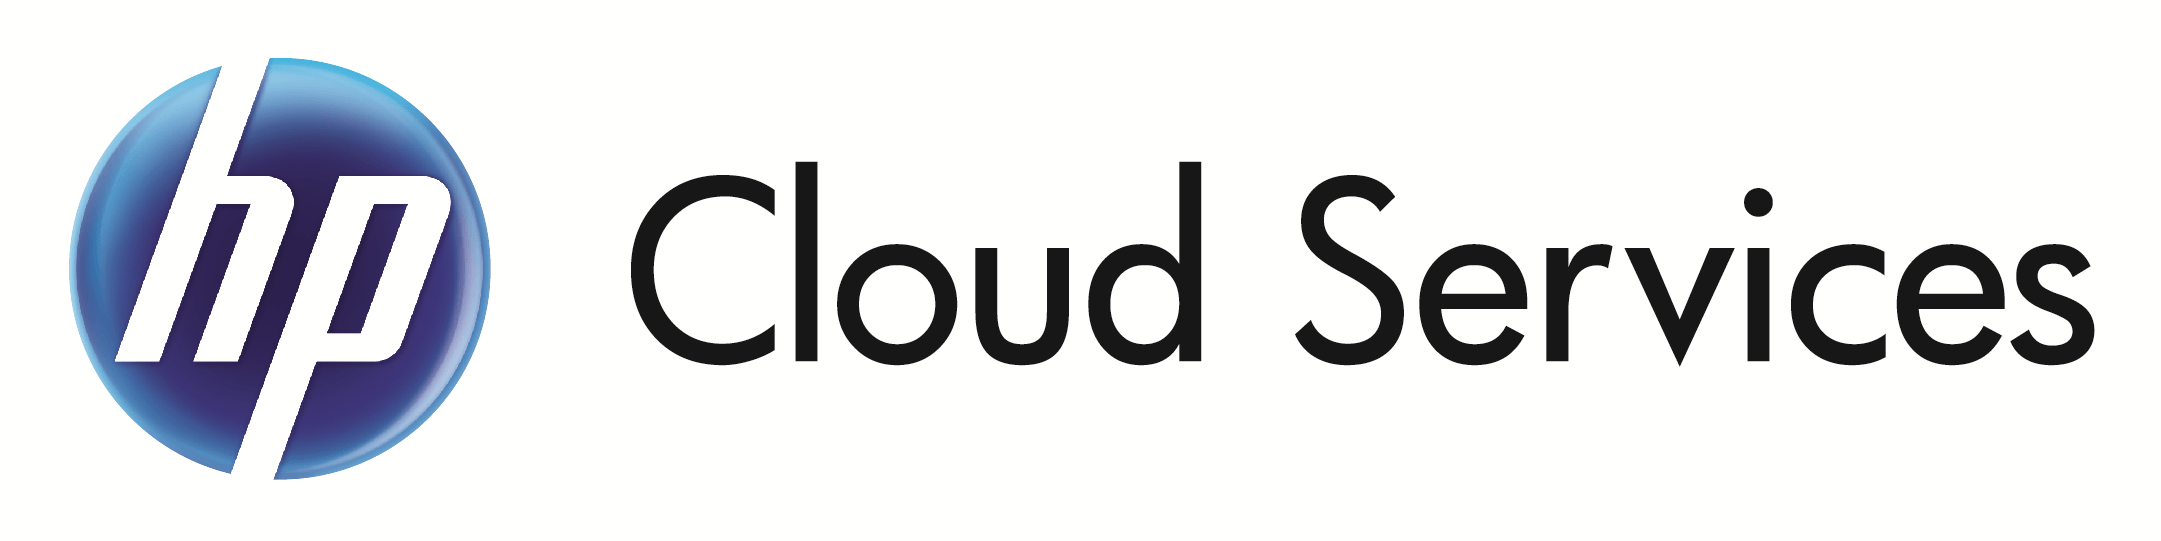 HP Services Logo - Make that NO HP Cloud Services